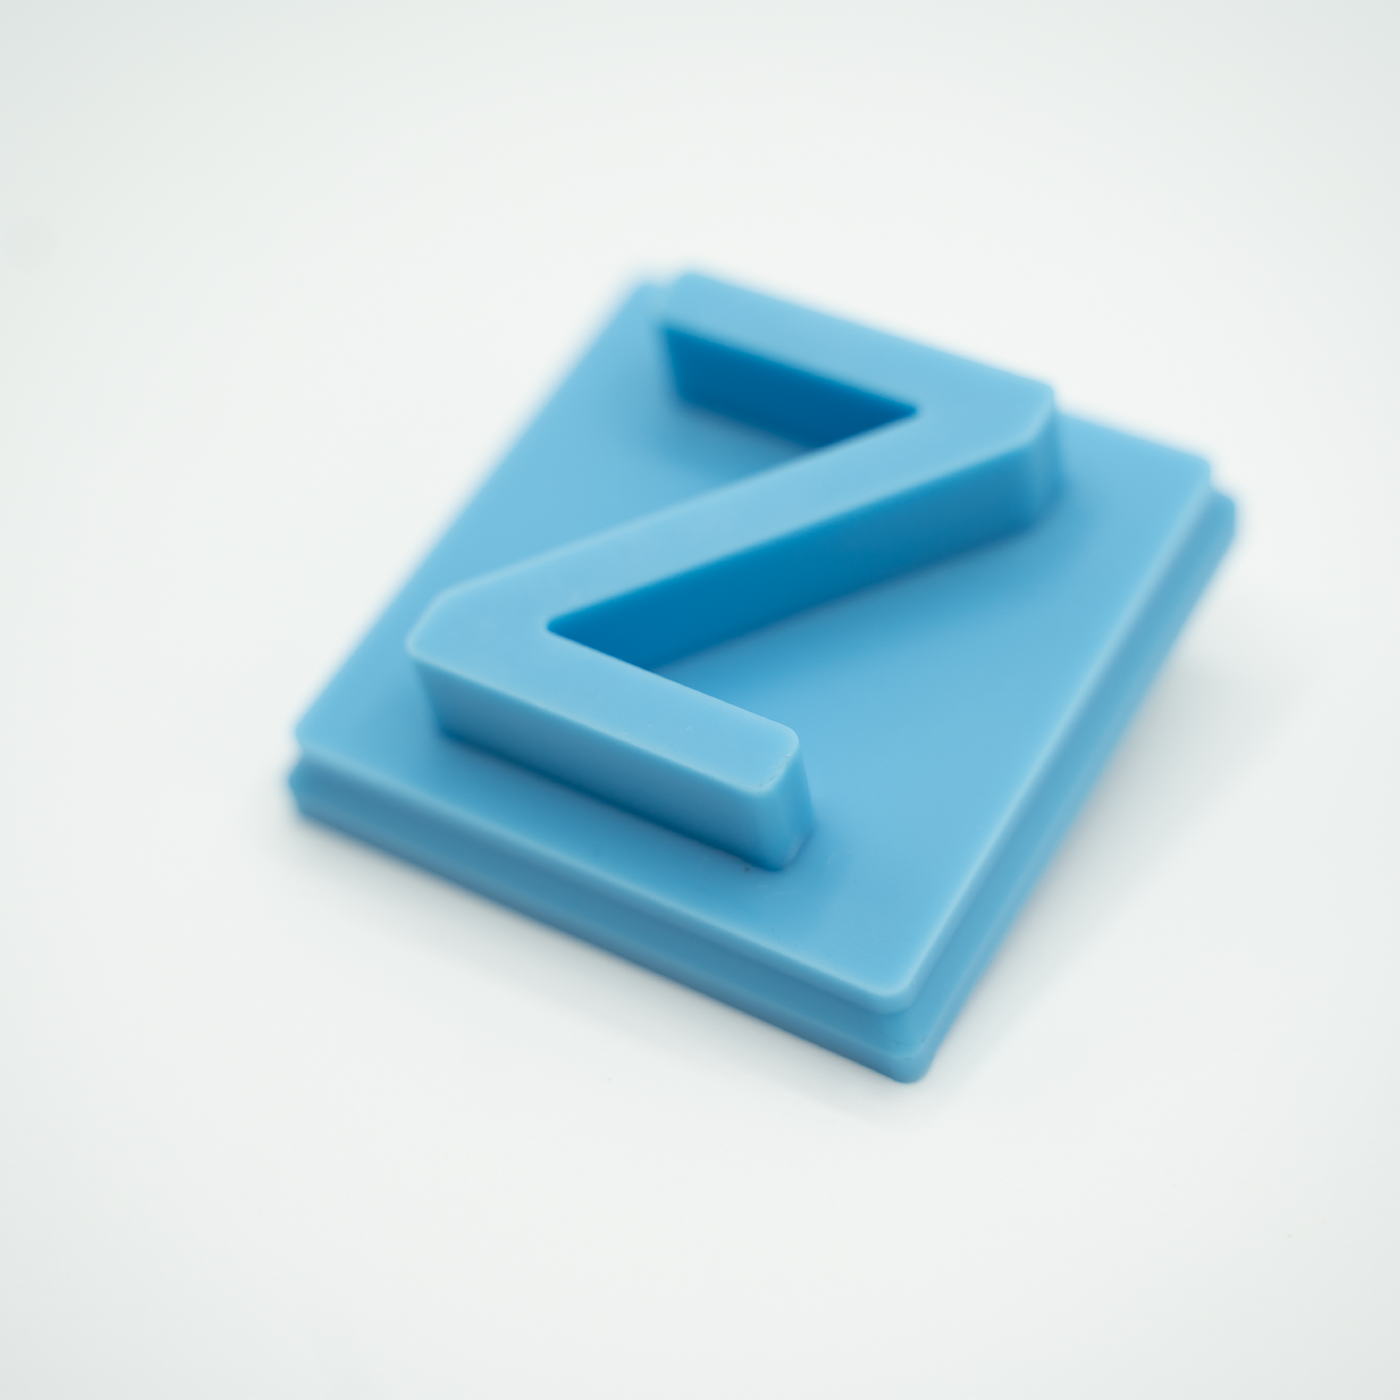 Letter Z Inserts - 3 Pack